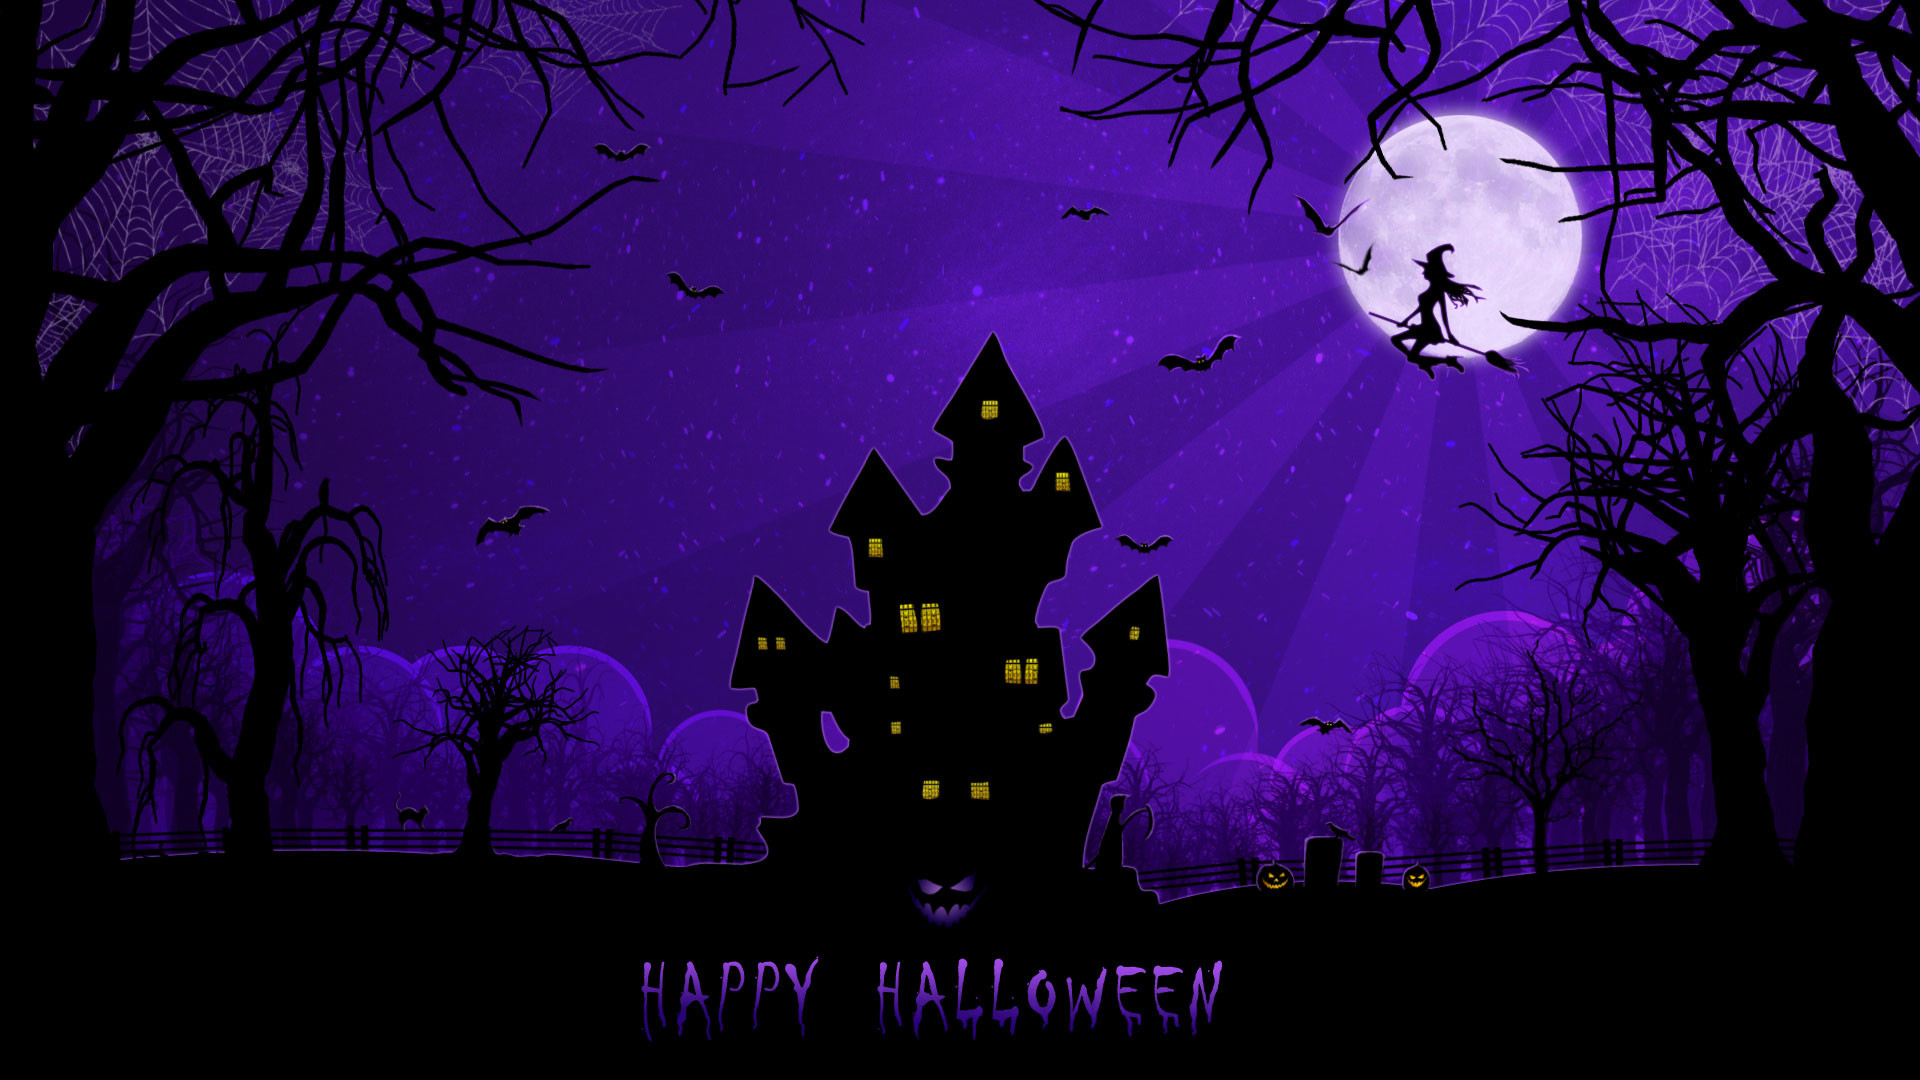 Spooky Halloween Background Image